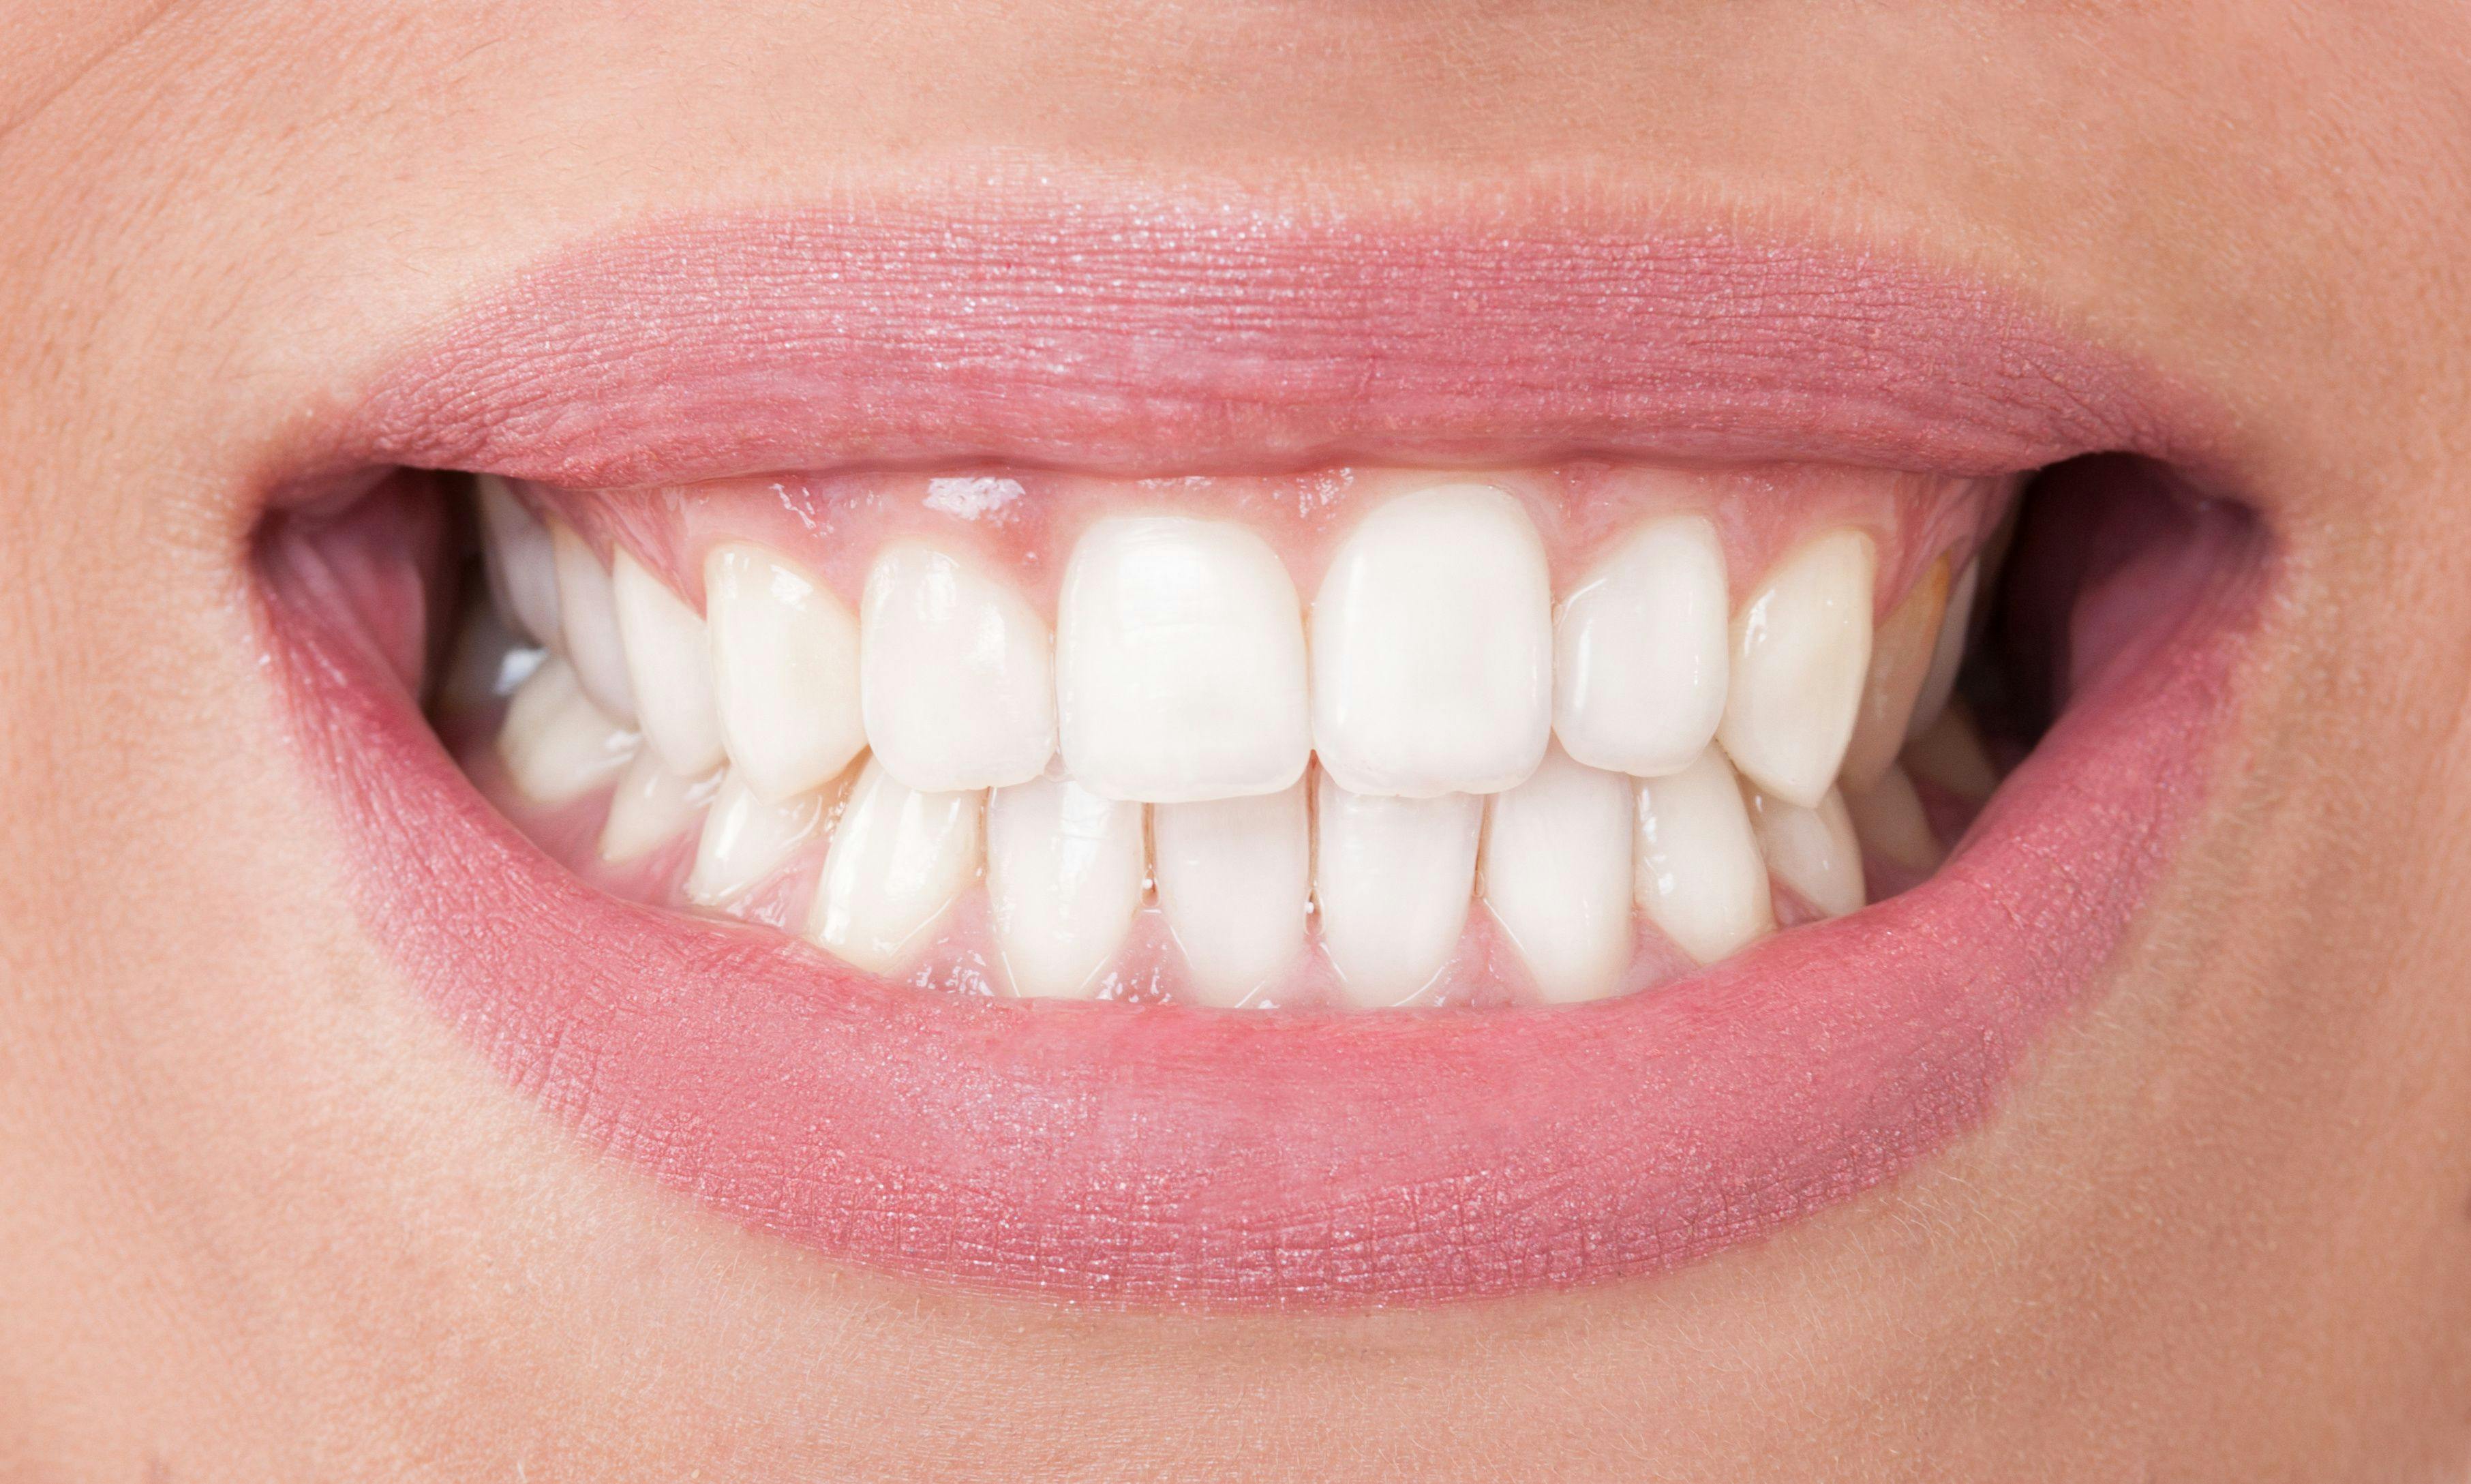 Close up of teeth | Image credit: Catalin Pop - stock.adobe.com